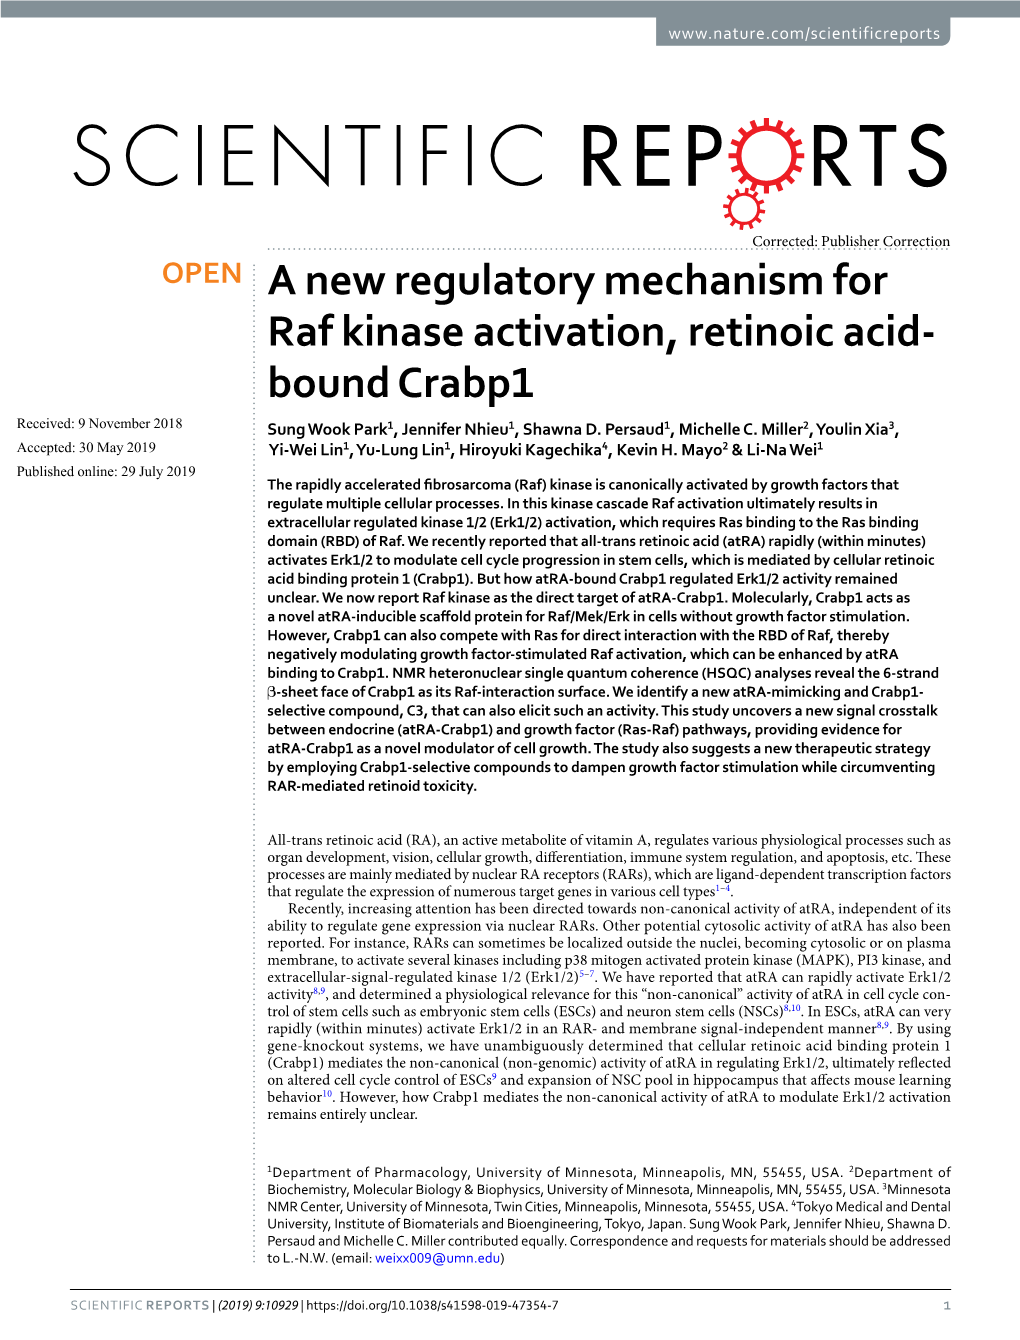 A New Regulatory Mechanism for Raf Kinase Activation, Retinoic Acid- Bound Crabp1 Received: 9 November 2018 Sung Wook Park1, Jennifer Nhieu1, Shawna D